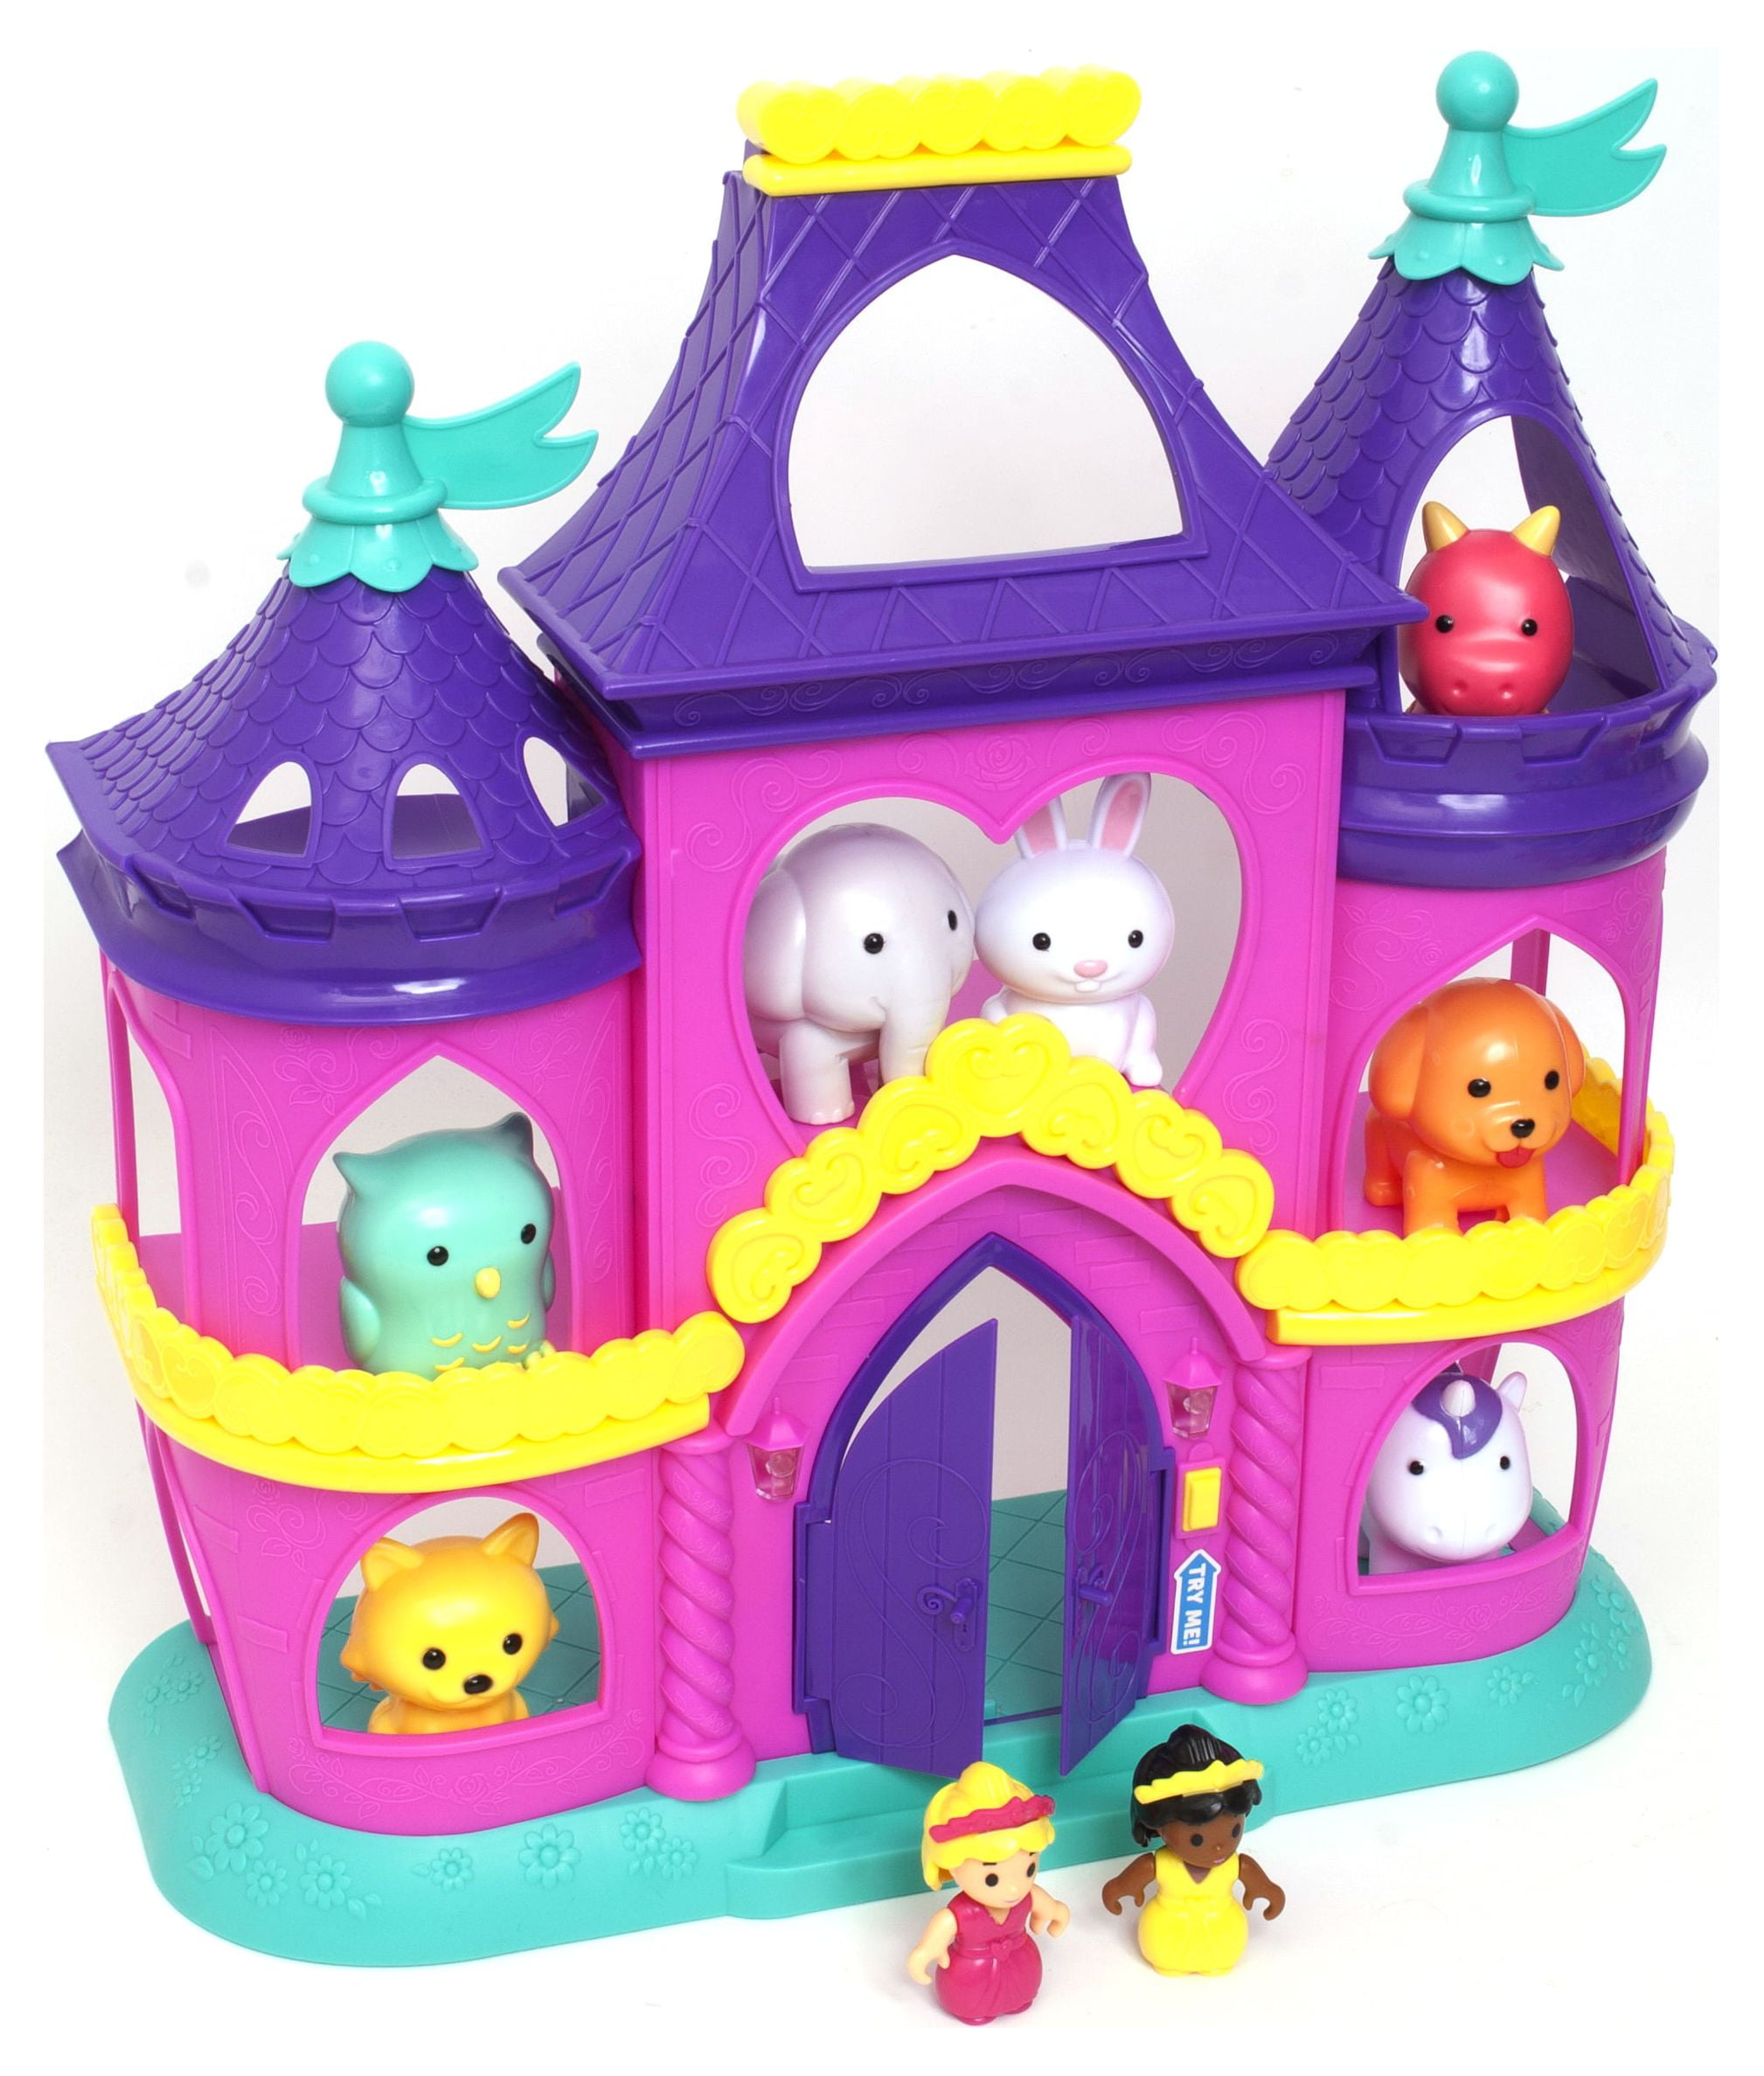 Playtive junior castle - Toys for kids - 111301523